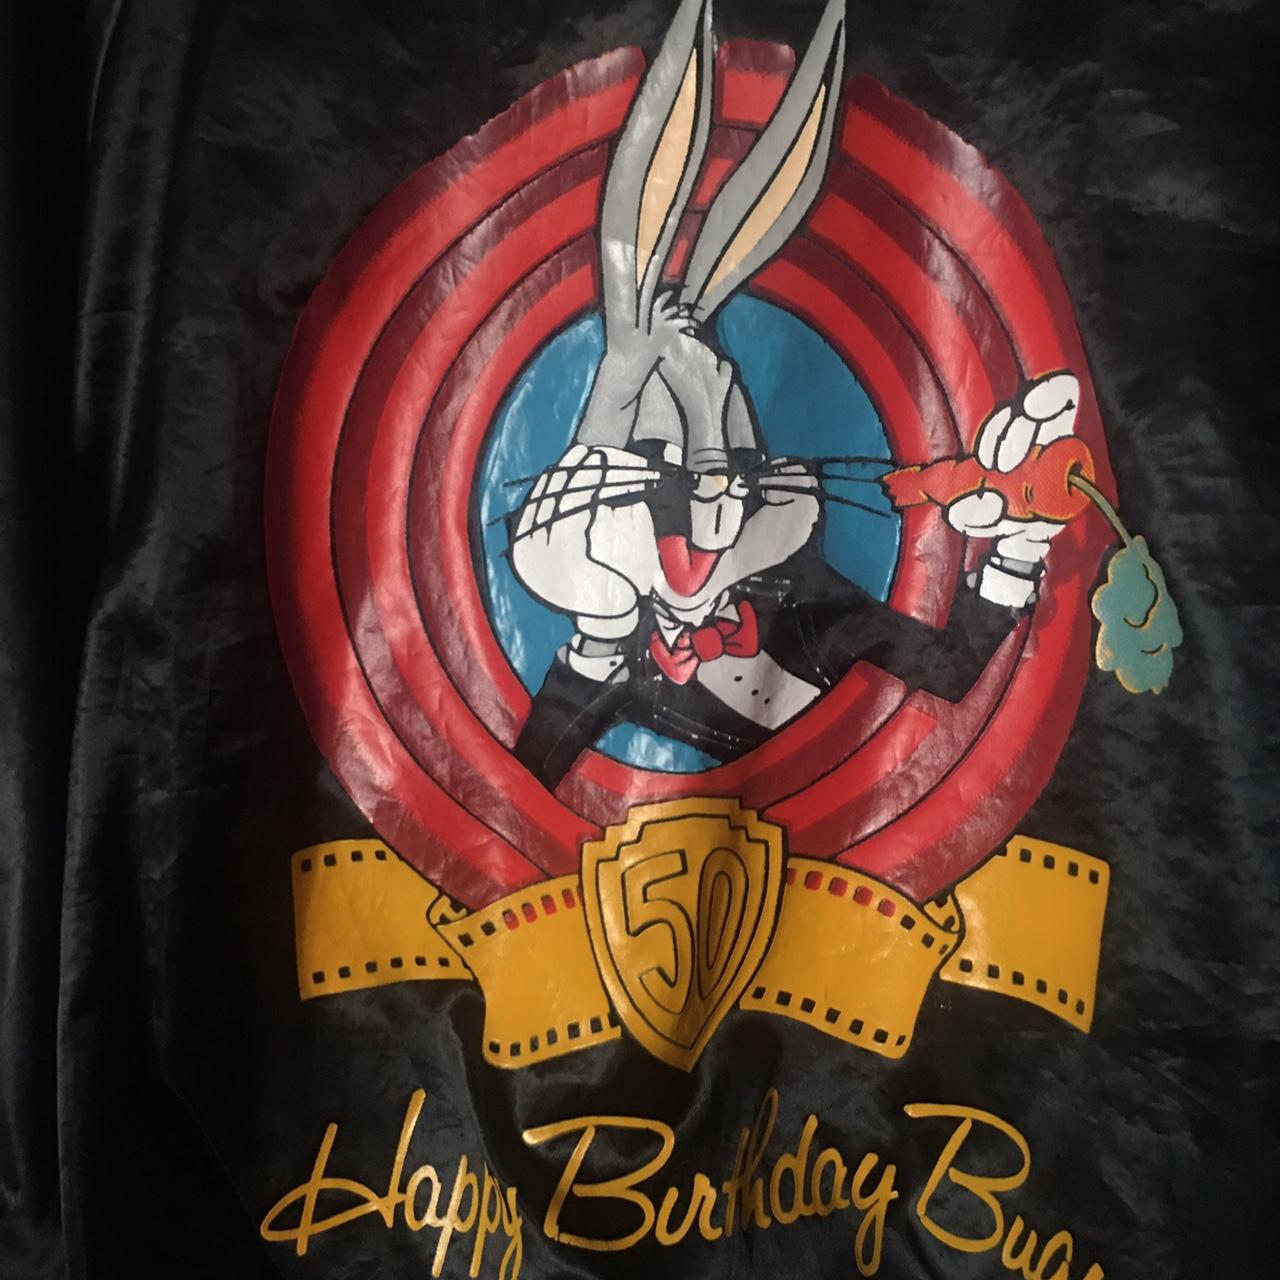 Vintage Vintage Looney Tunes Bugs Bunny 50th Anniversary varsity